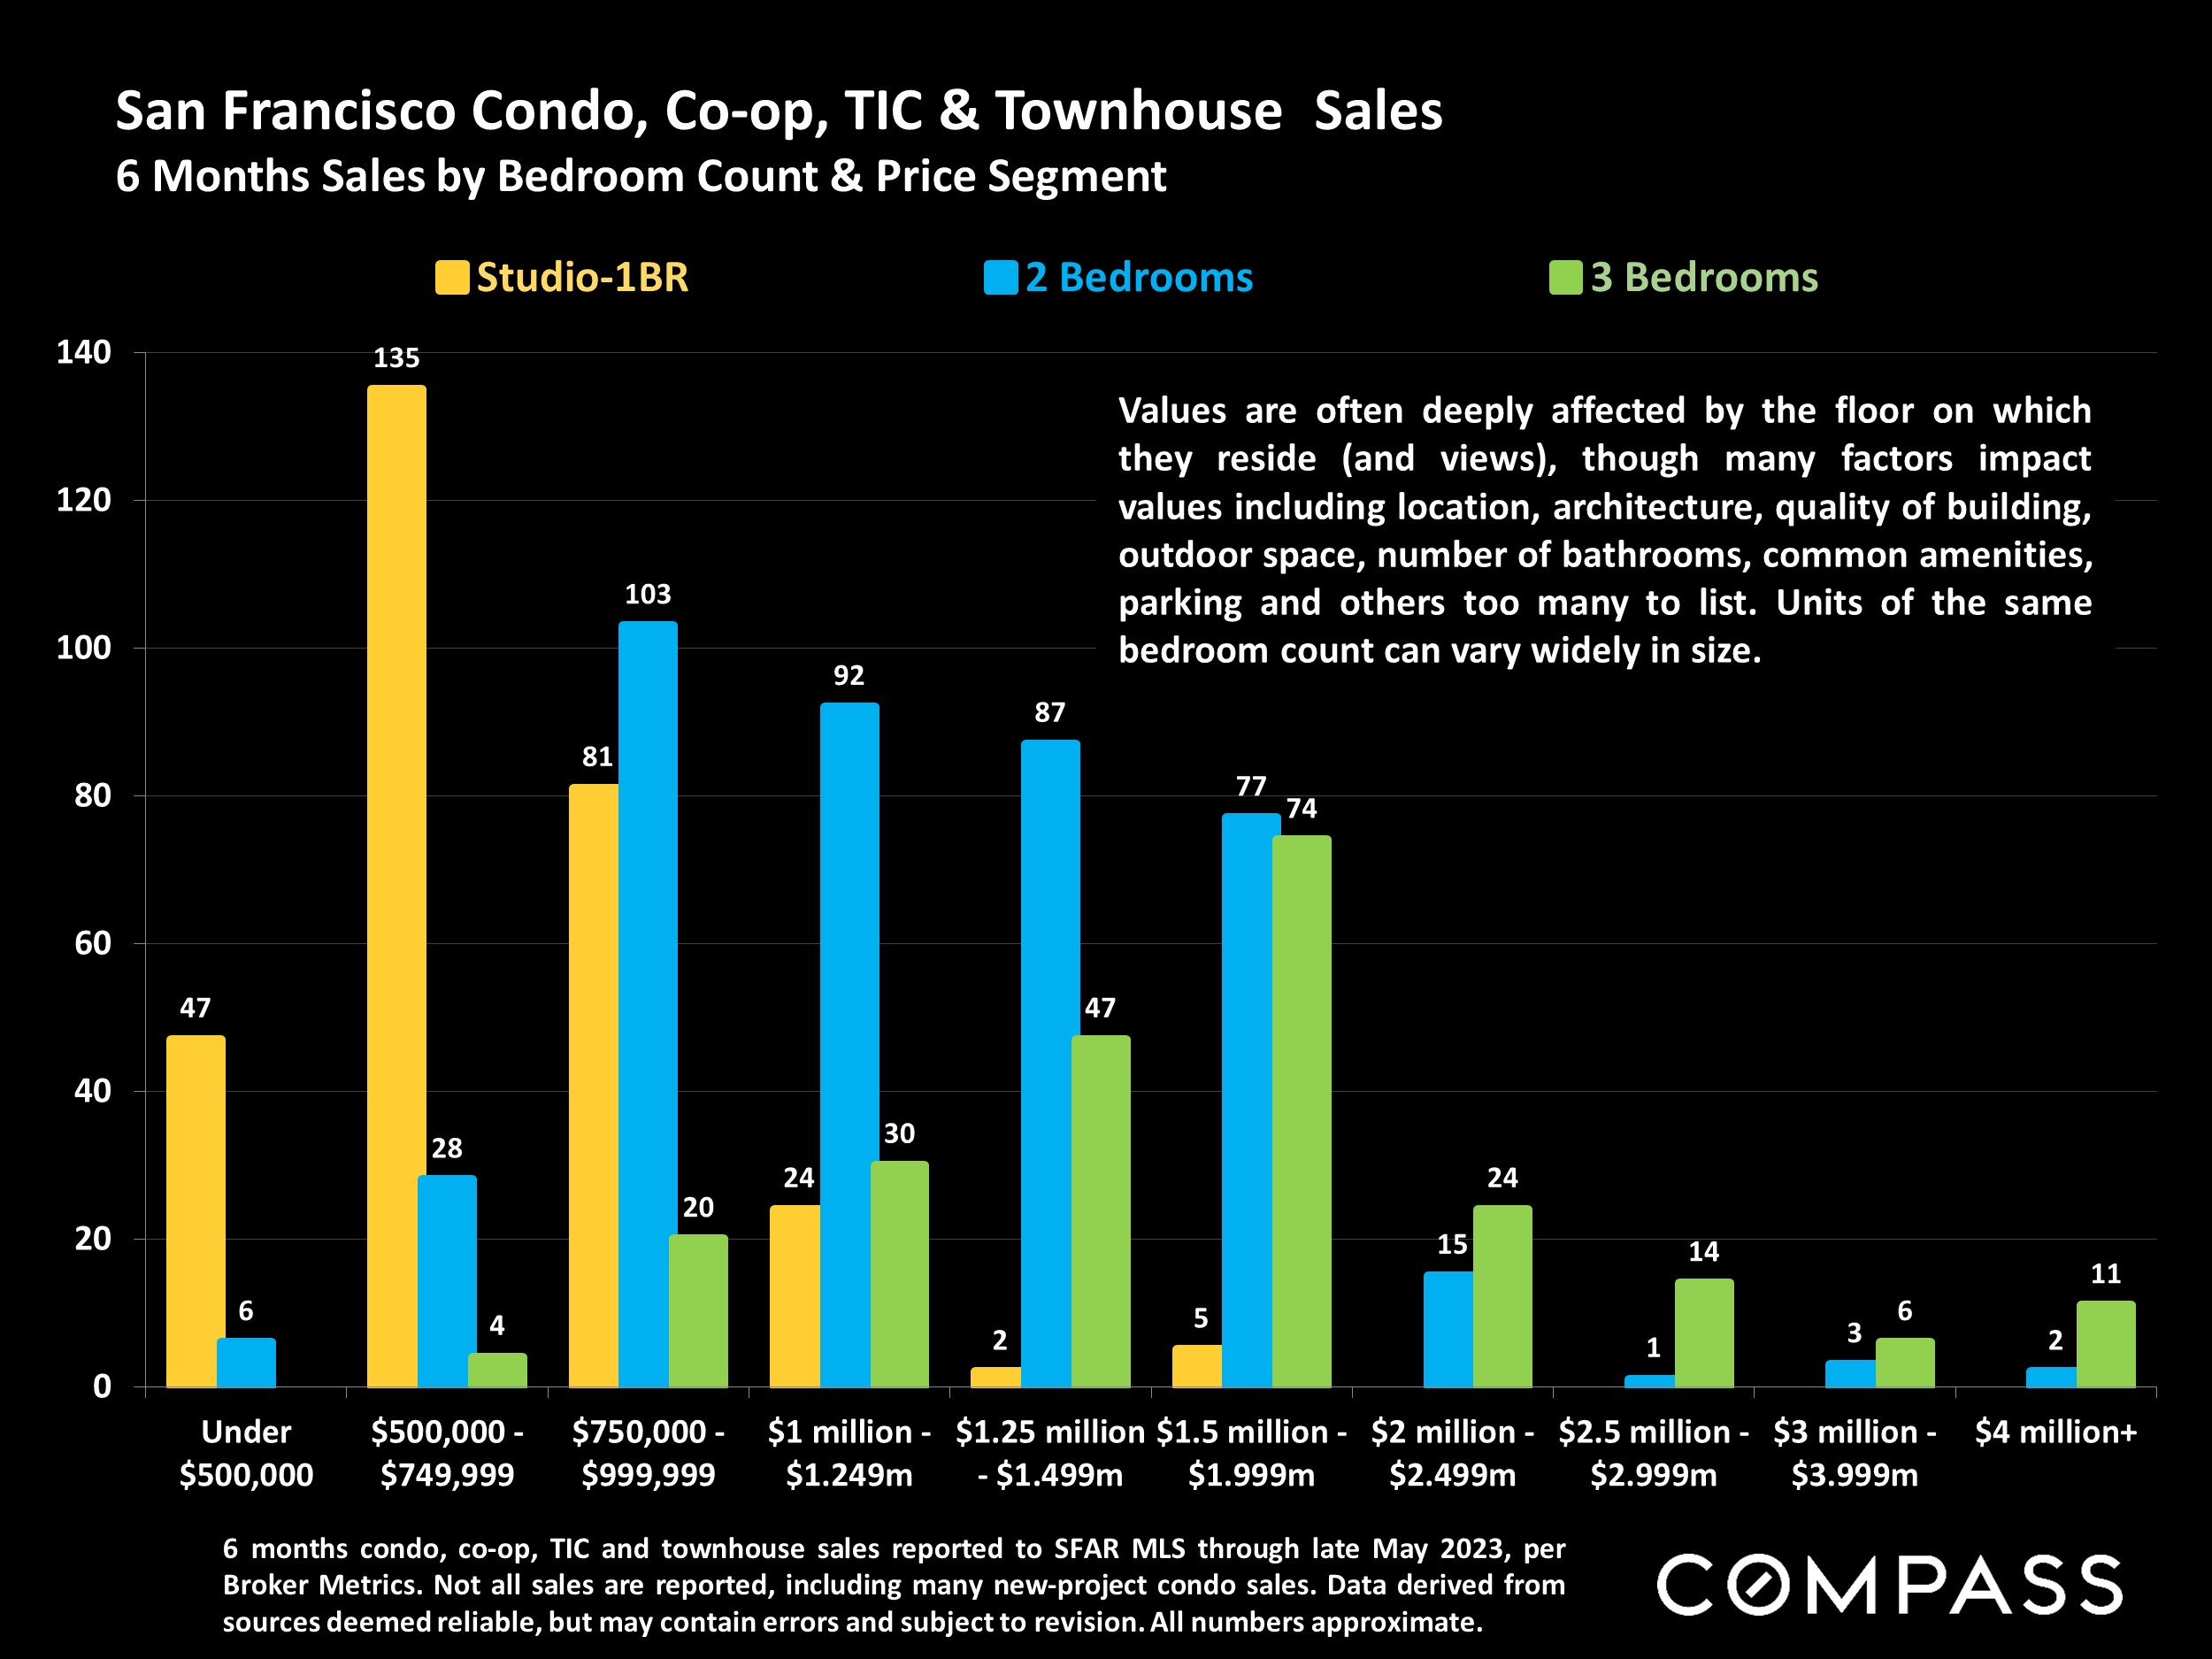 San Francisco Condo, Co-op, TIC & Townhouse Sales